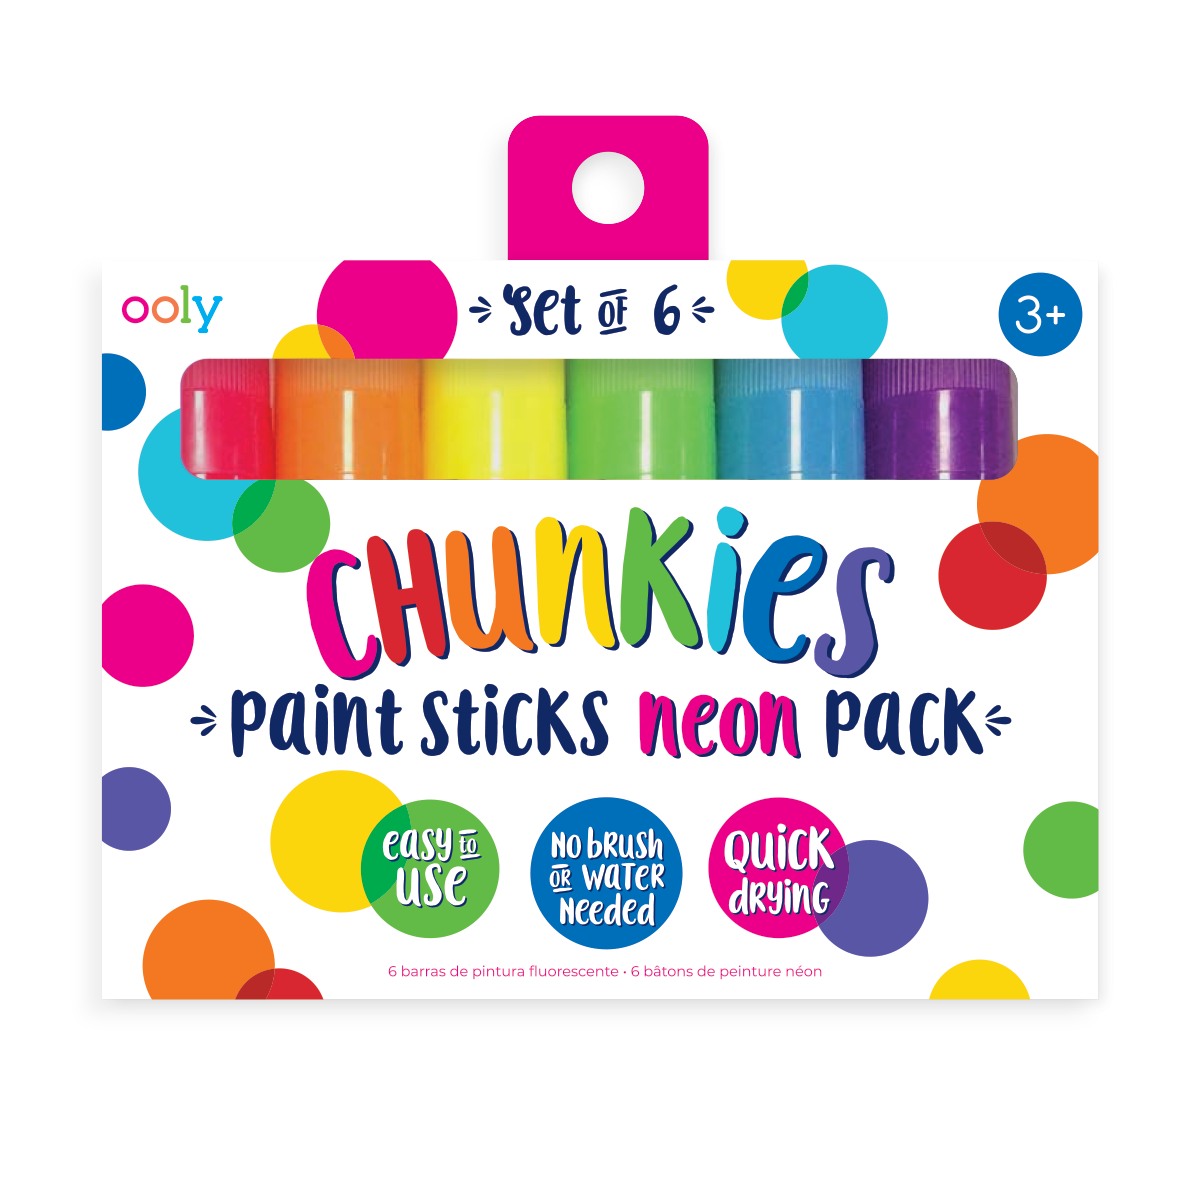 Chunkie Paint Sticks Variety Pack Set of 24